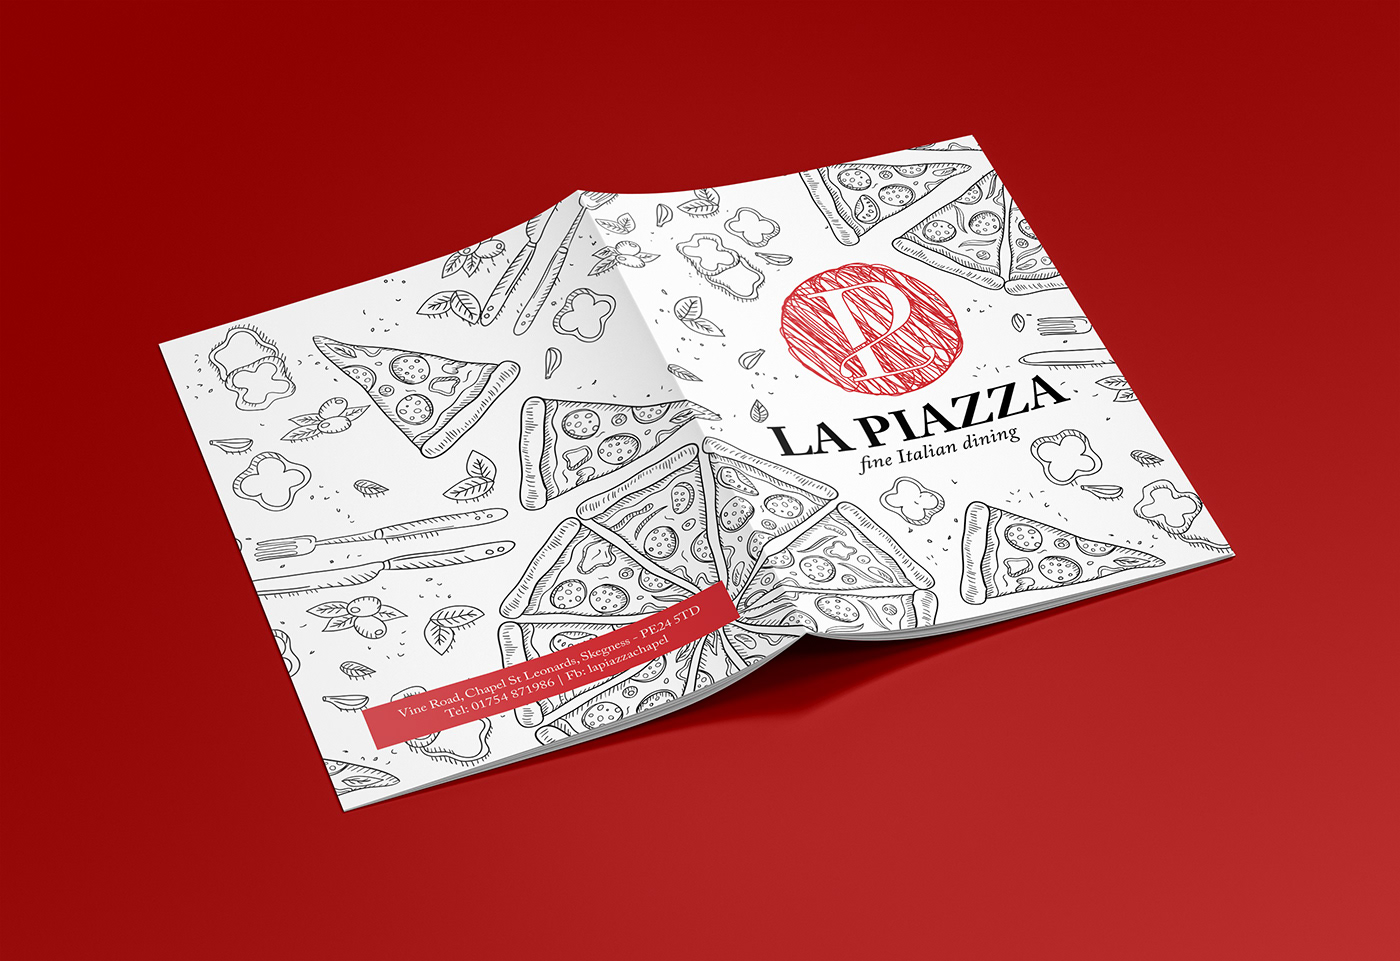 Catalogue lapiazza leontios menu Pasta Pizza printdesign sakellis